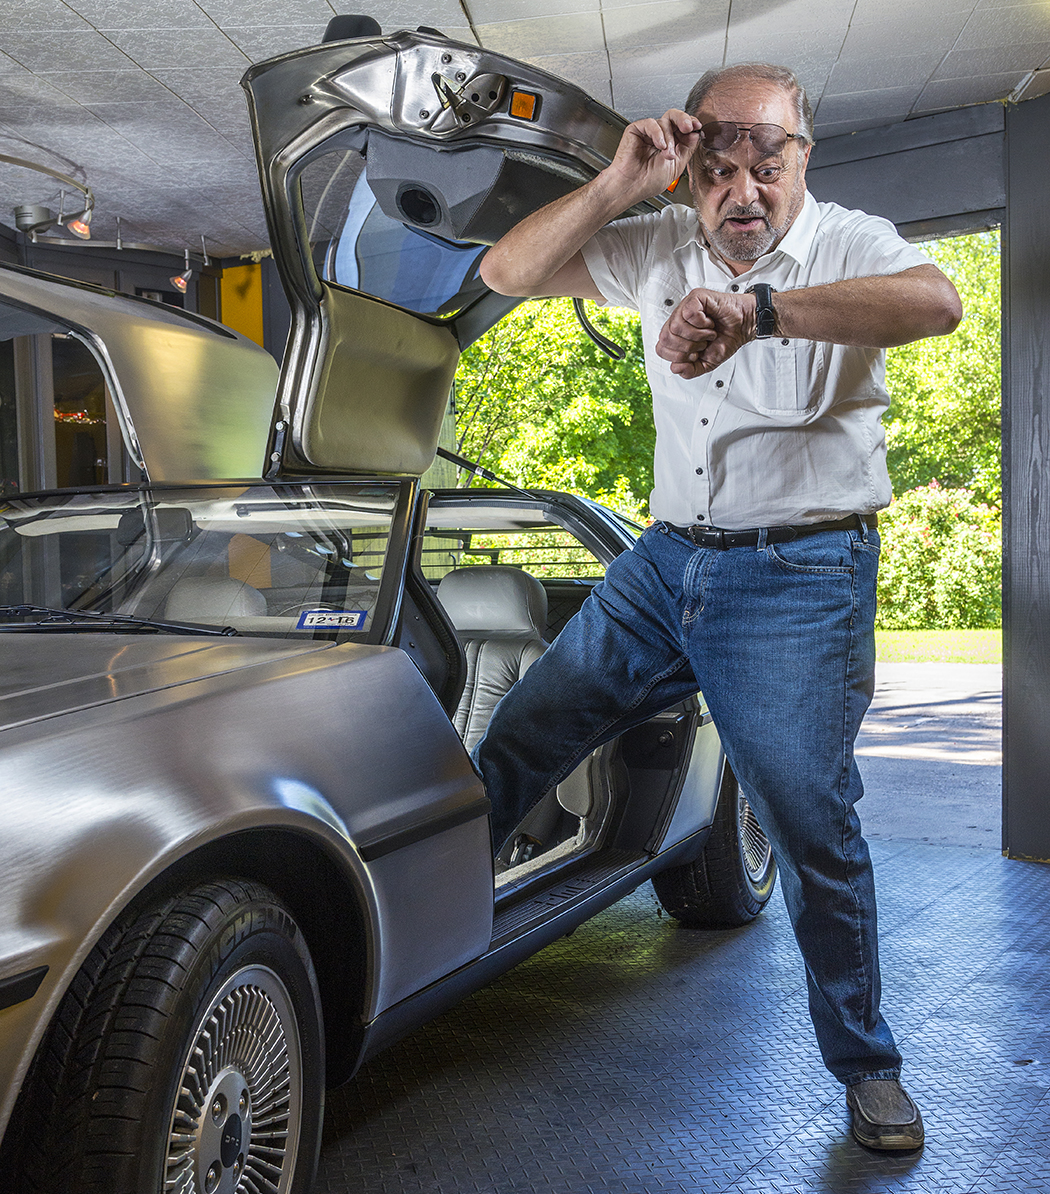 In his best Doc Brown pose, Jaime Sendra steps out of his 1980 DeLorean DMC-12. (Photo by Danny Fulgencio)